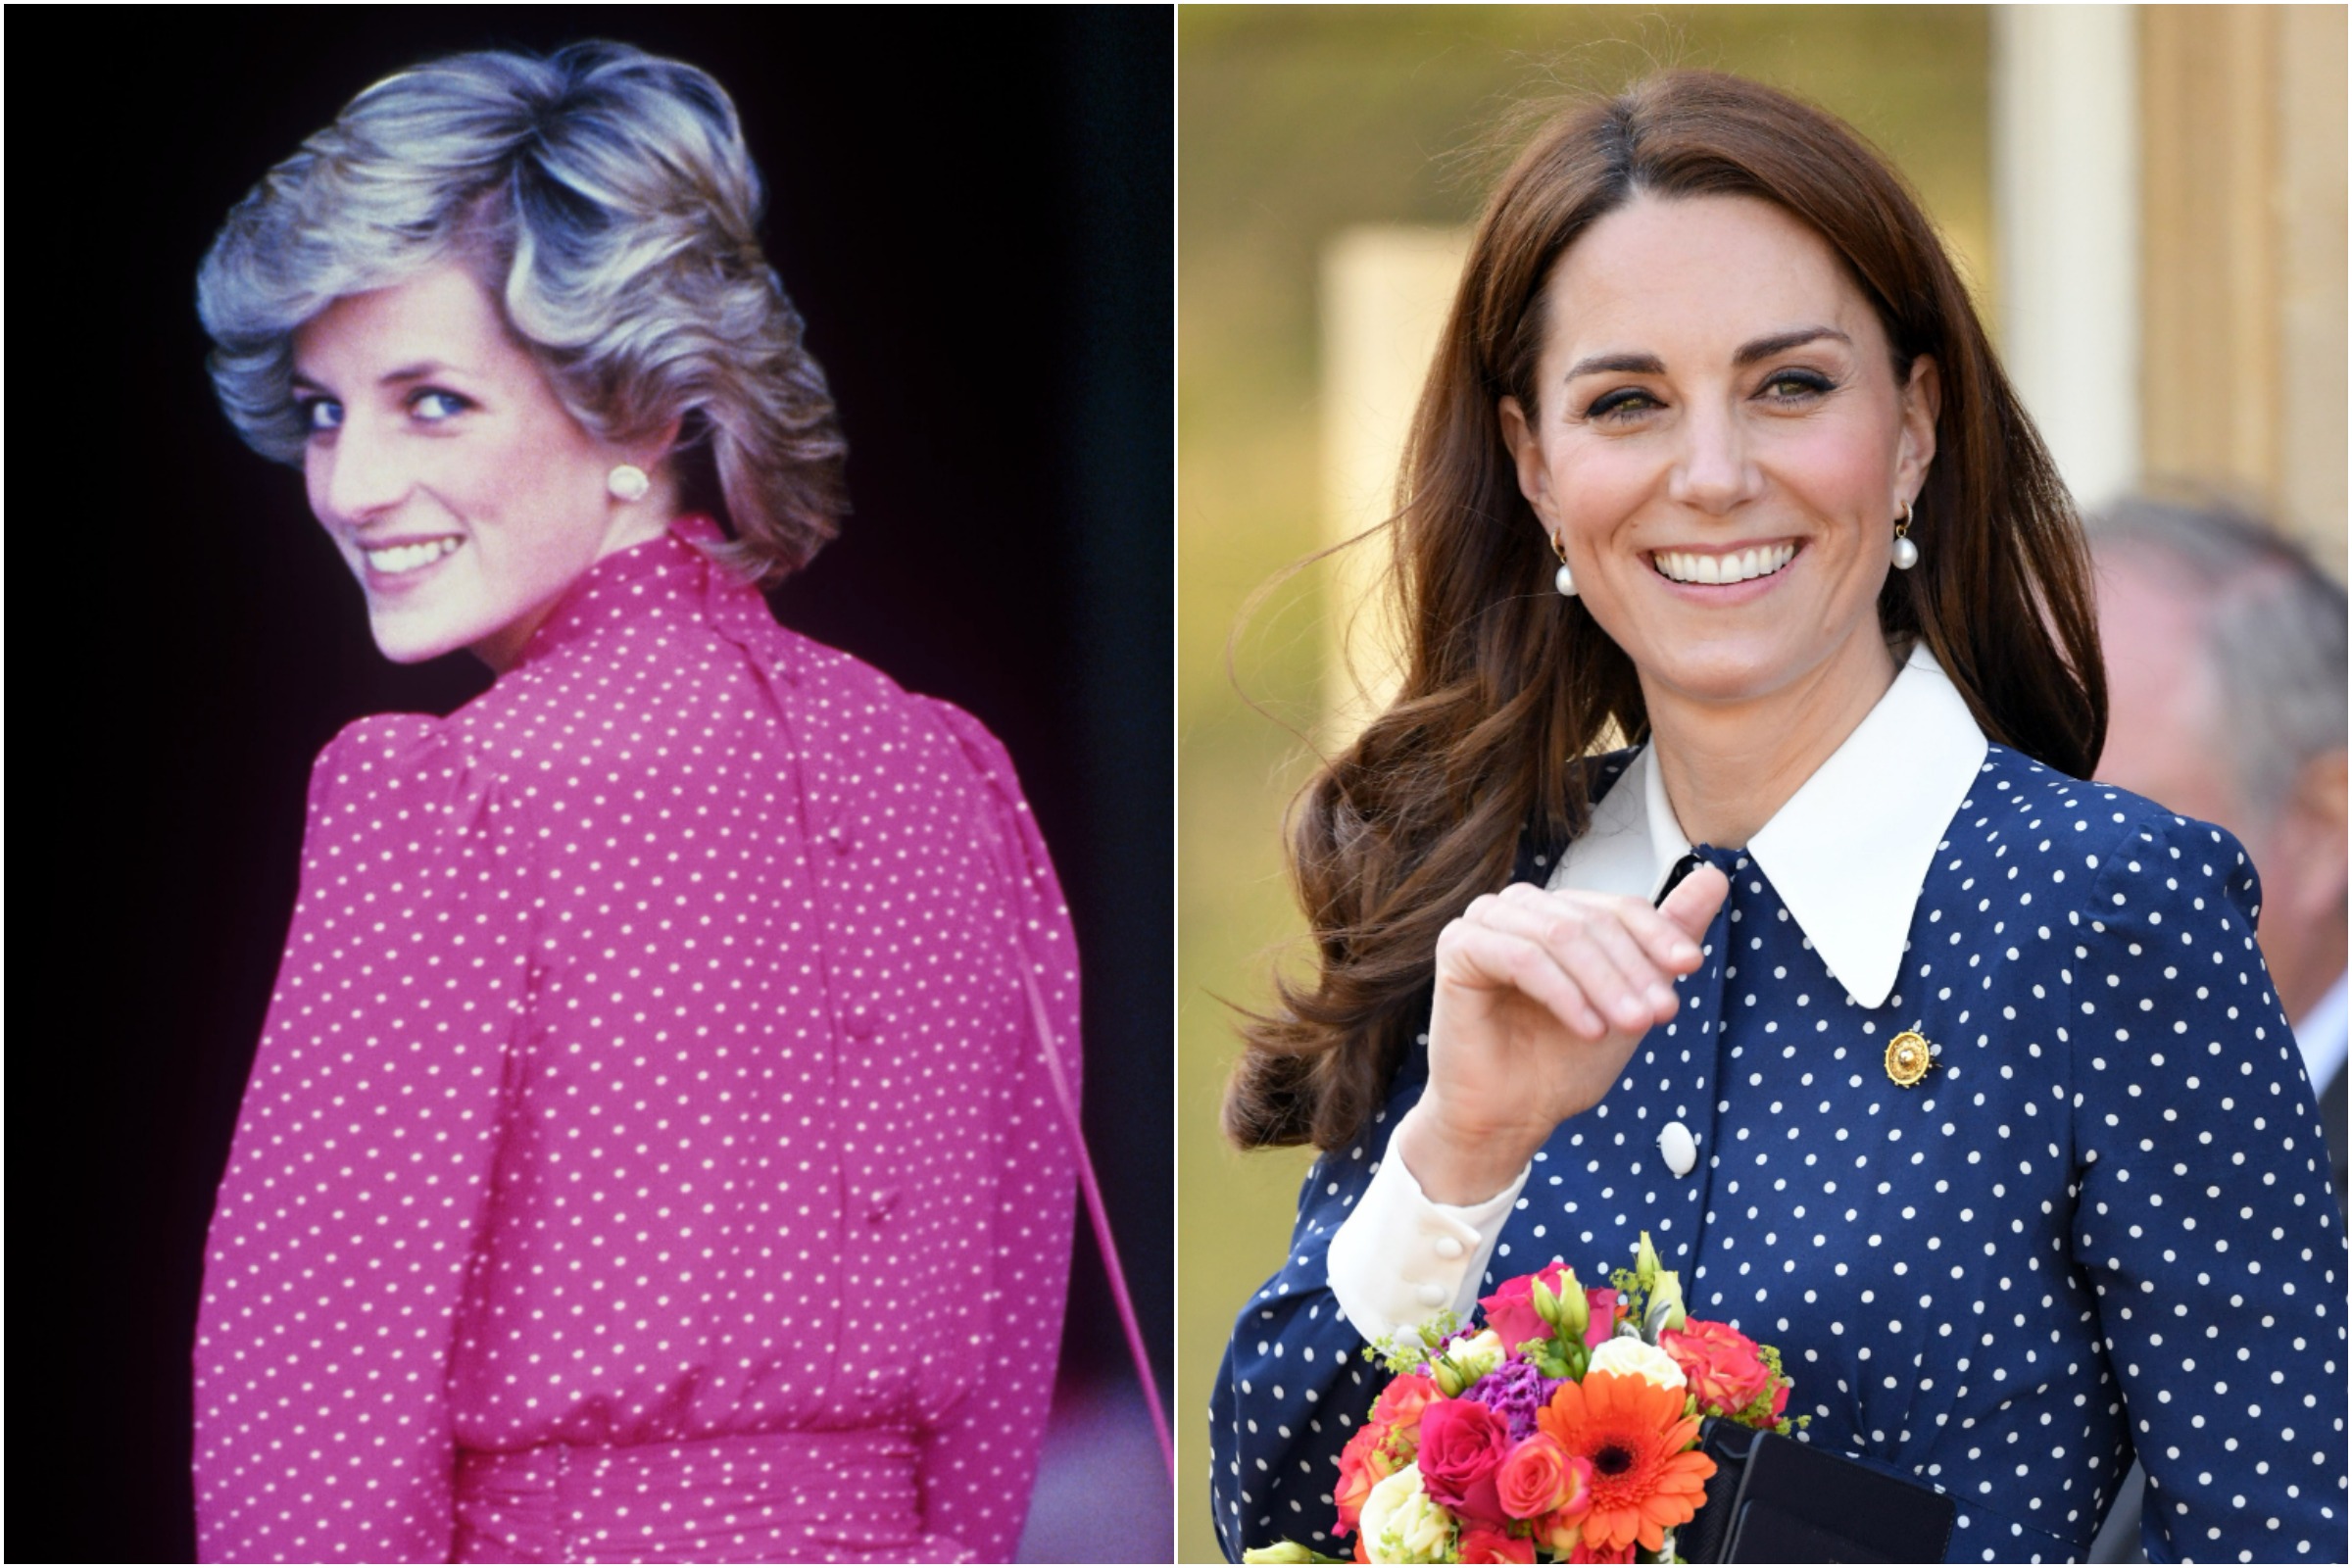 Kate Middleton recreates Princess Diana's polka-dot style at Royal